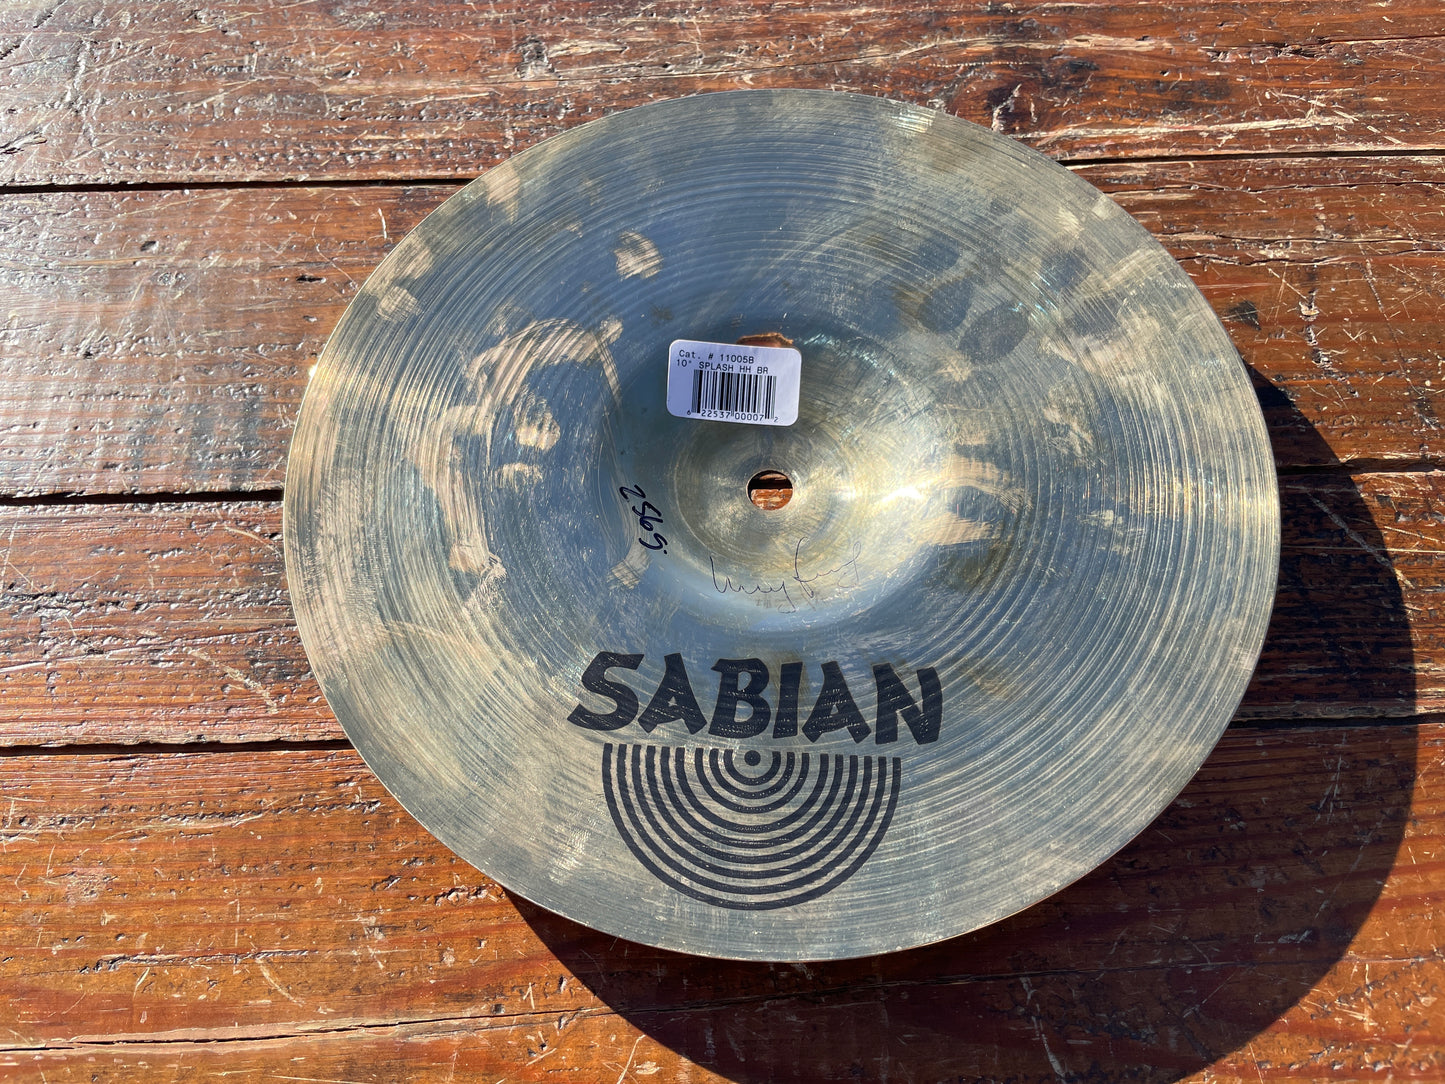 10" Sabian Hand Hammered HH Splash Cymbal Brilliant 256g 11005B